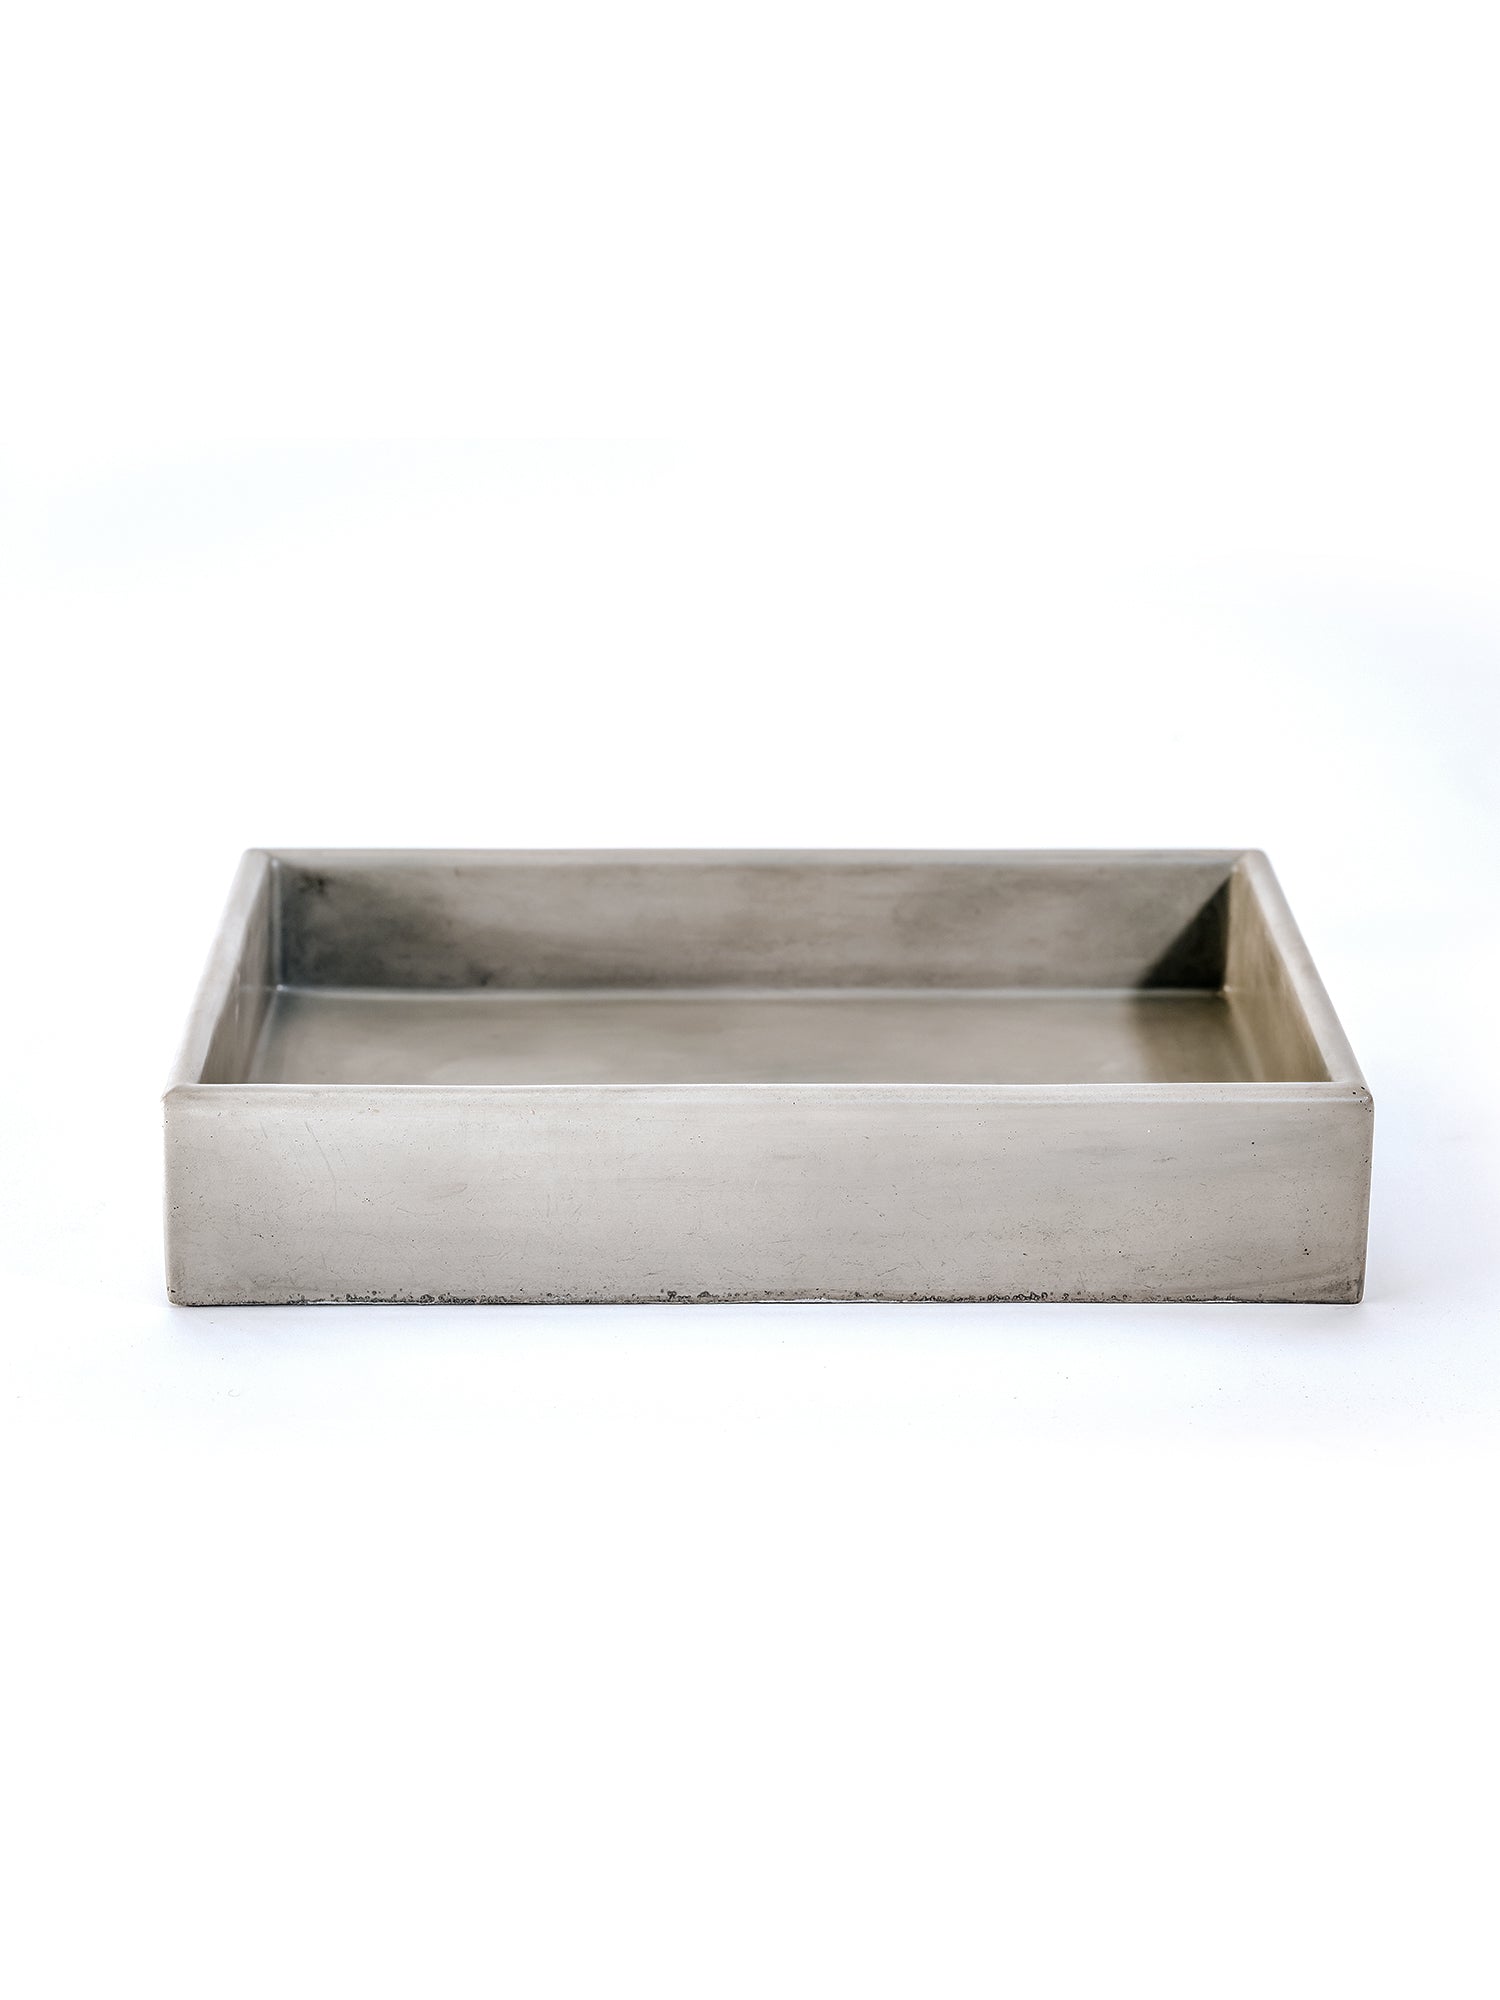 The Box Concrete Countertop Basin (Avail. in 14 Colours)